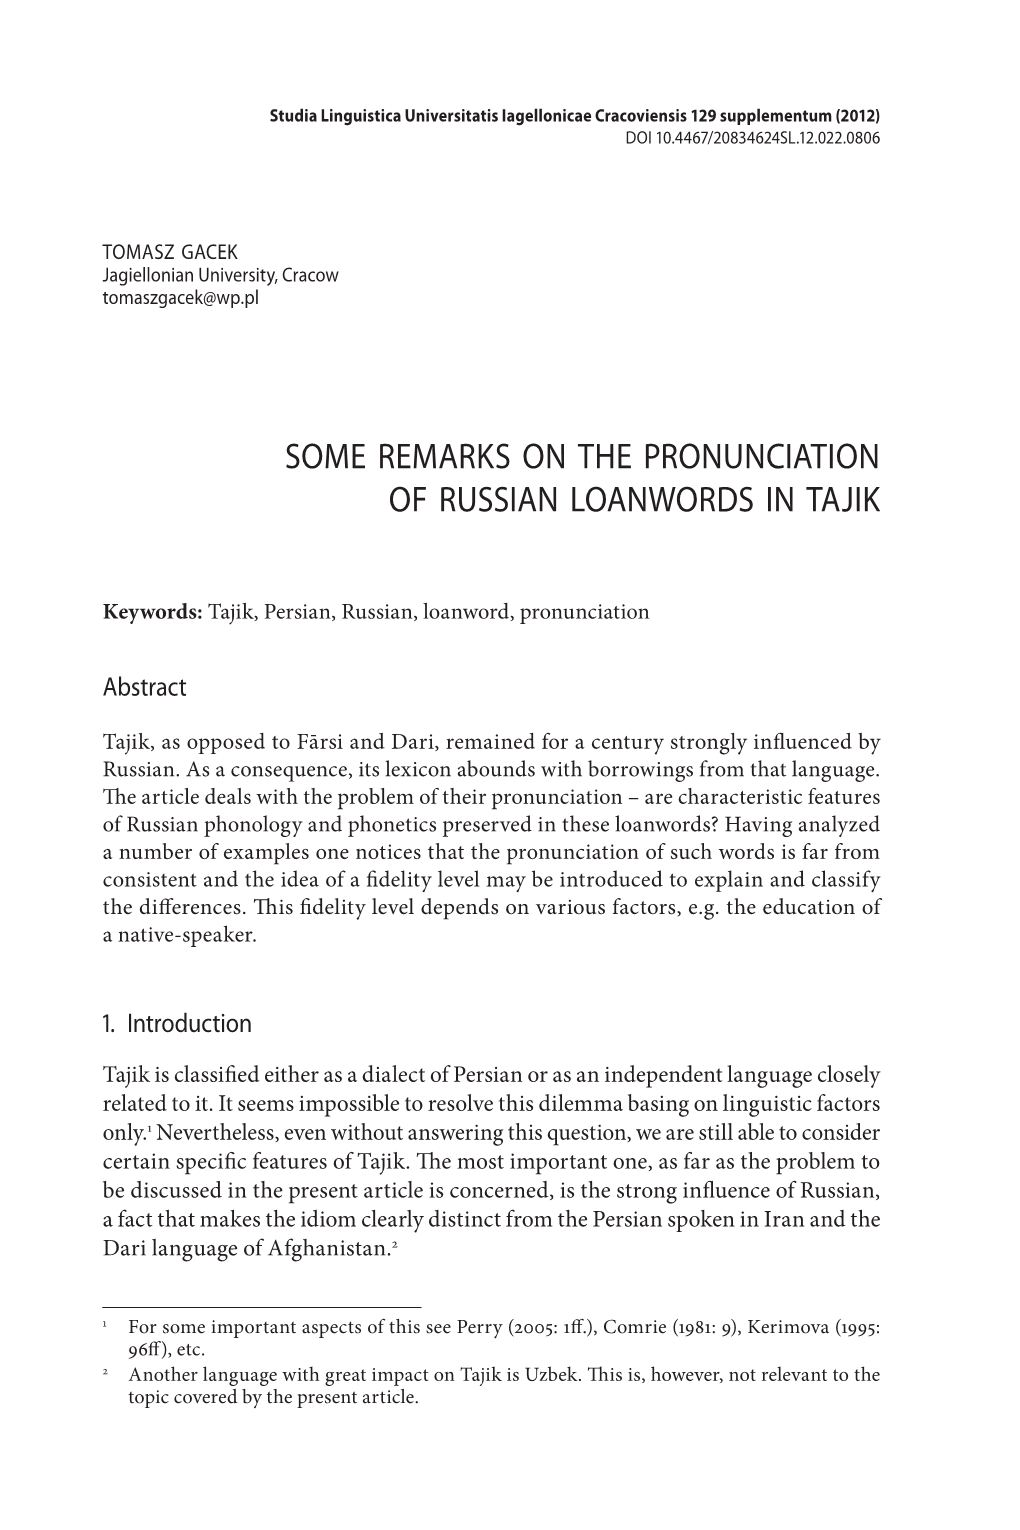 Some Remarks on the Pronunciation of Russian Loanwords in Tajik